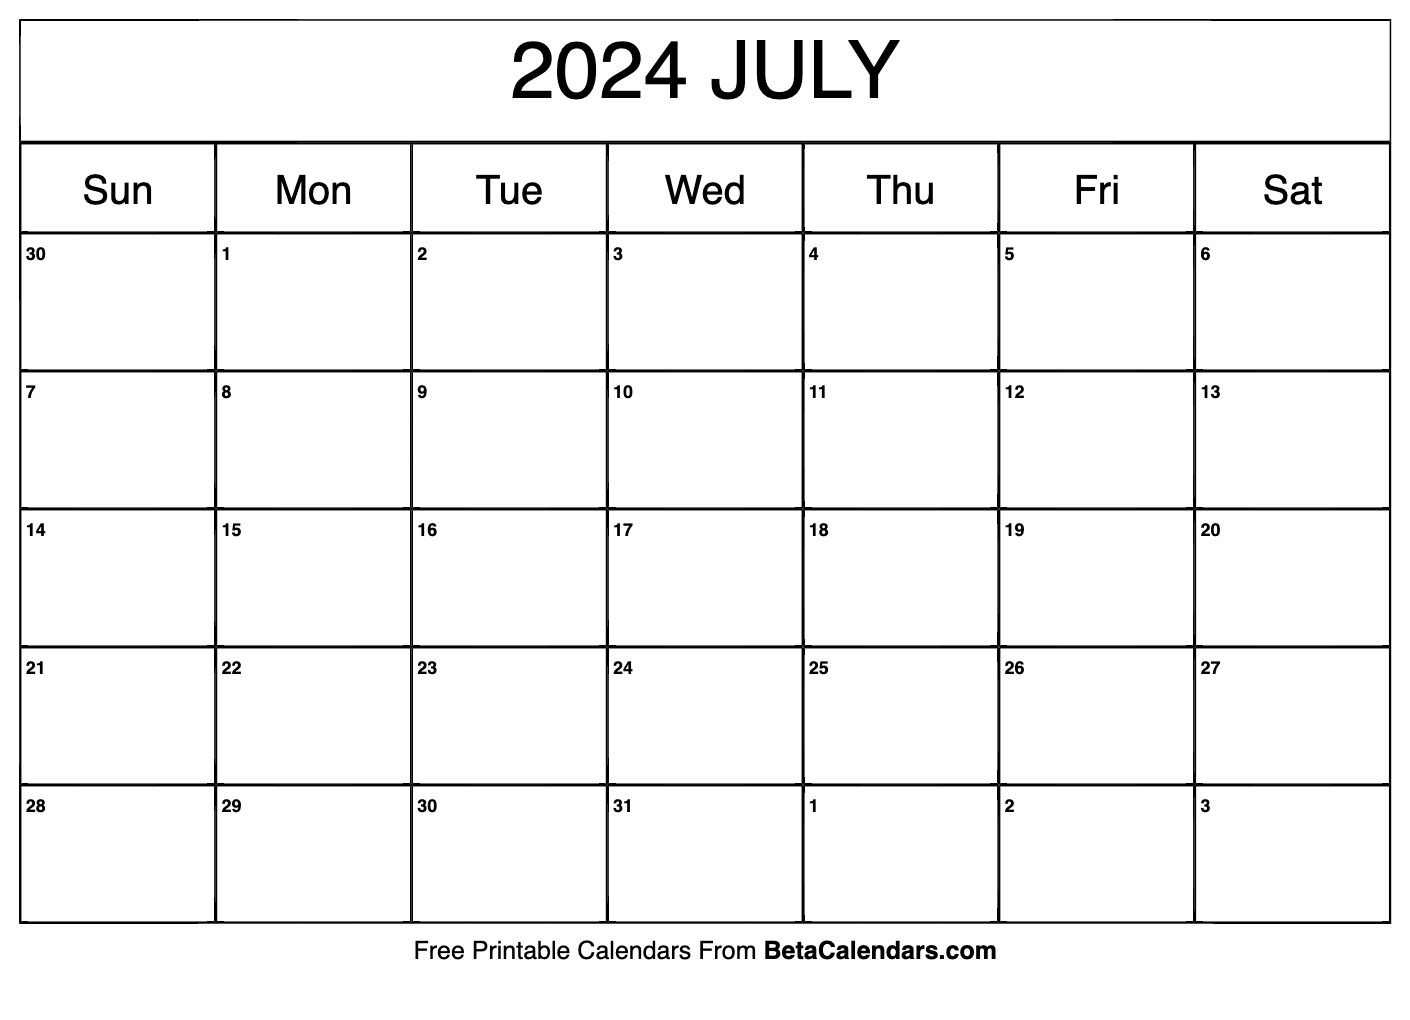 Free Printable July 2024 Calendar | Free July Printable Calendar 2024